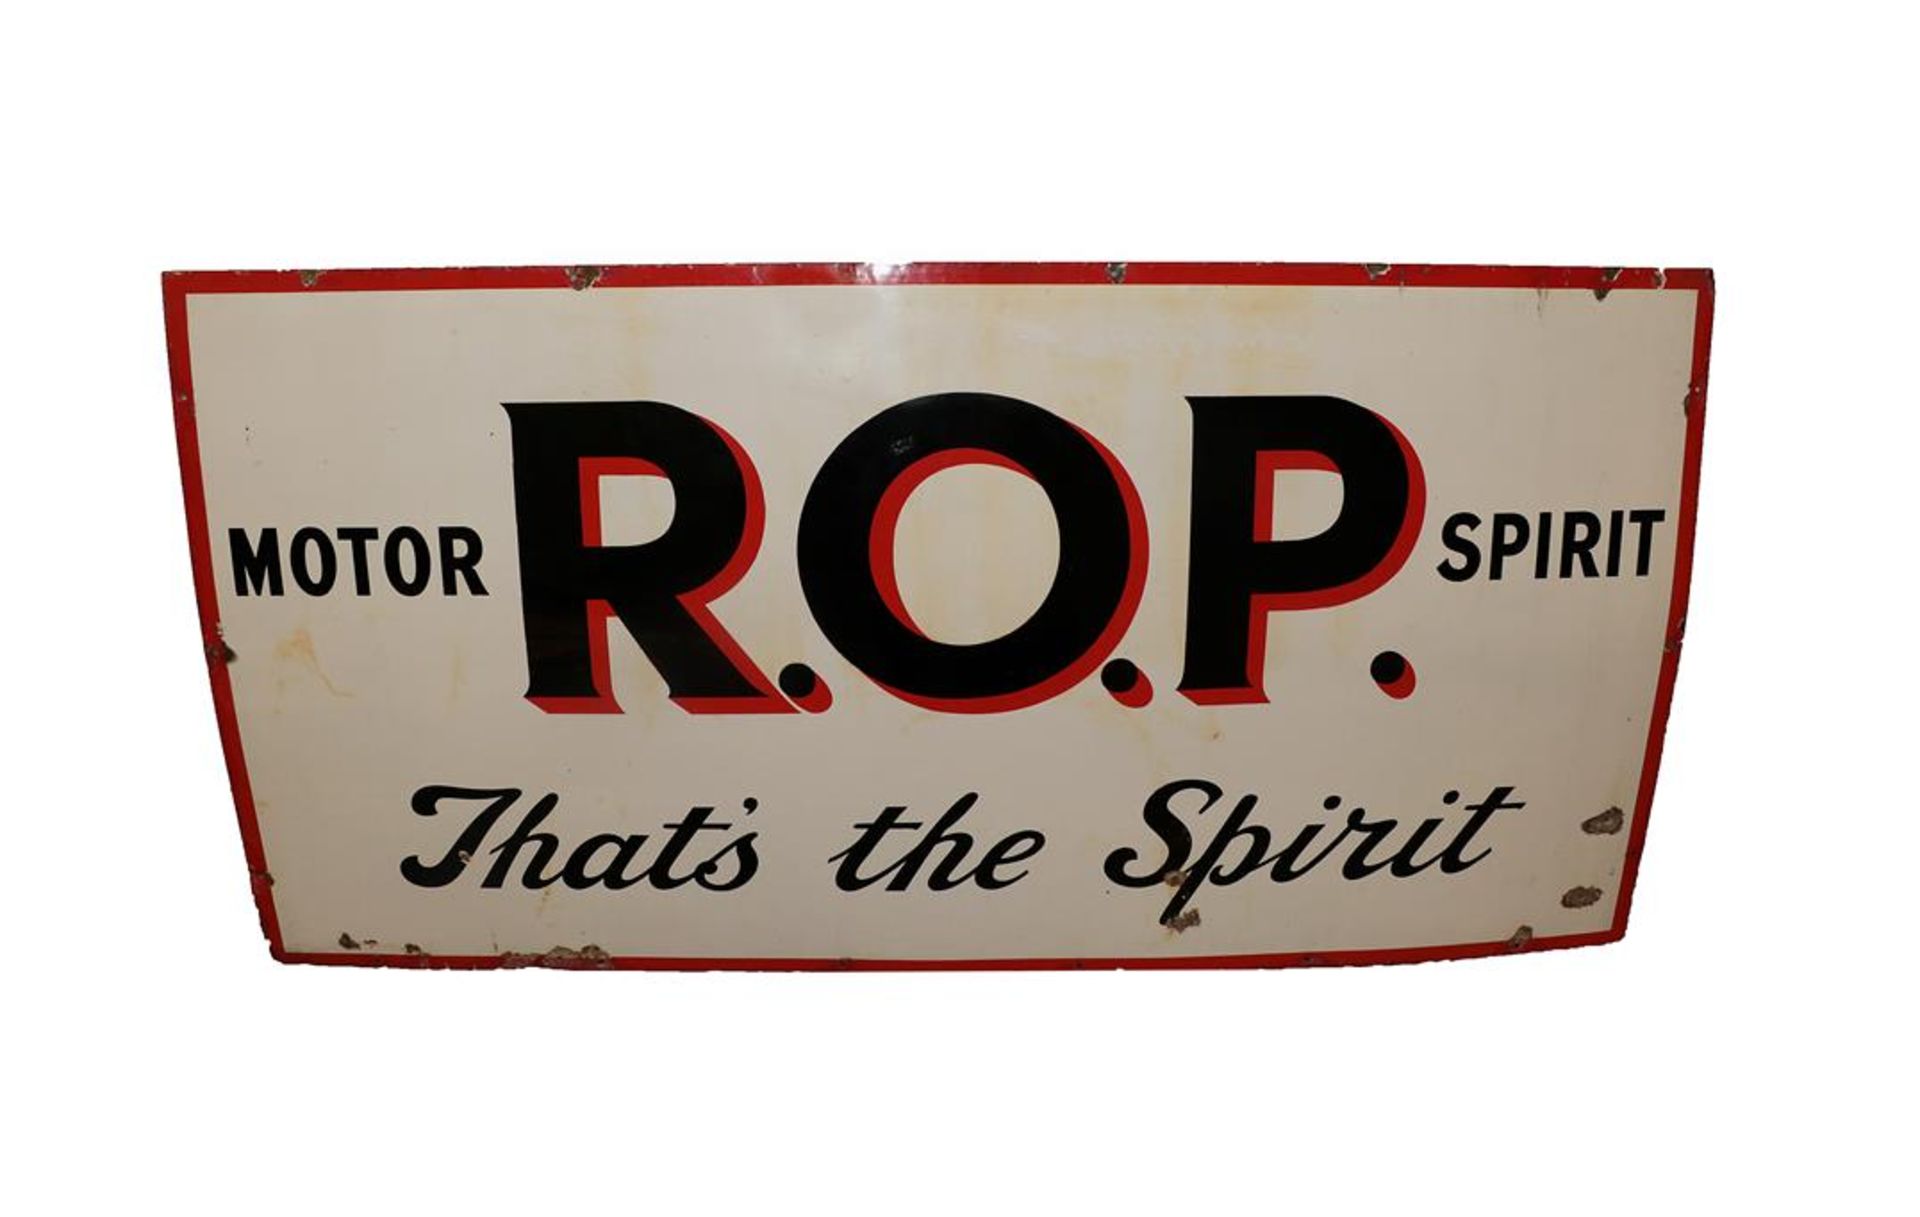 ROP Motor Spirit: A 1930's Singled-Sided Enamel Advertising Sign, 91cm by 182cm . No registration